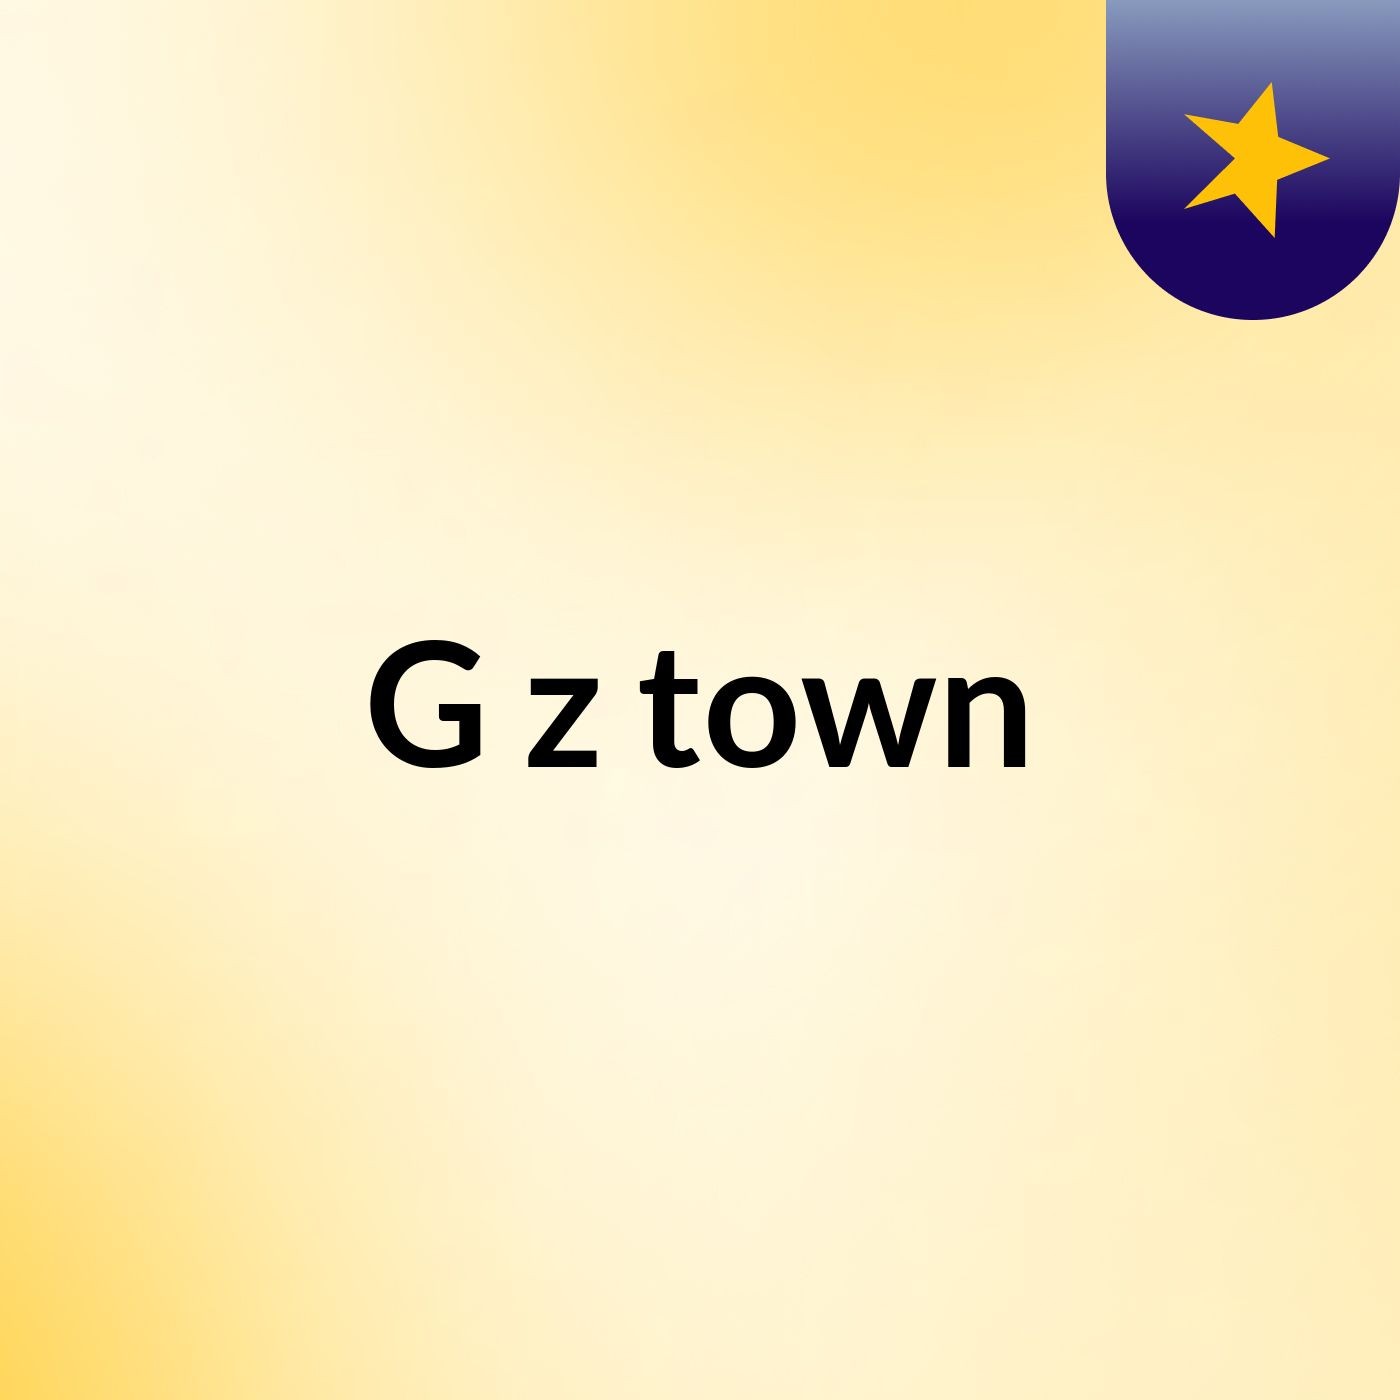 G'z town